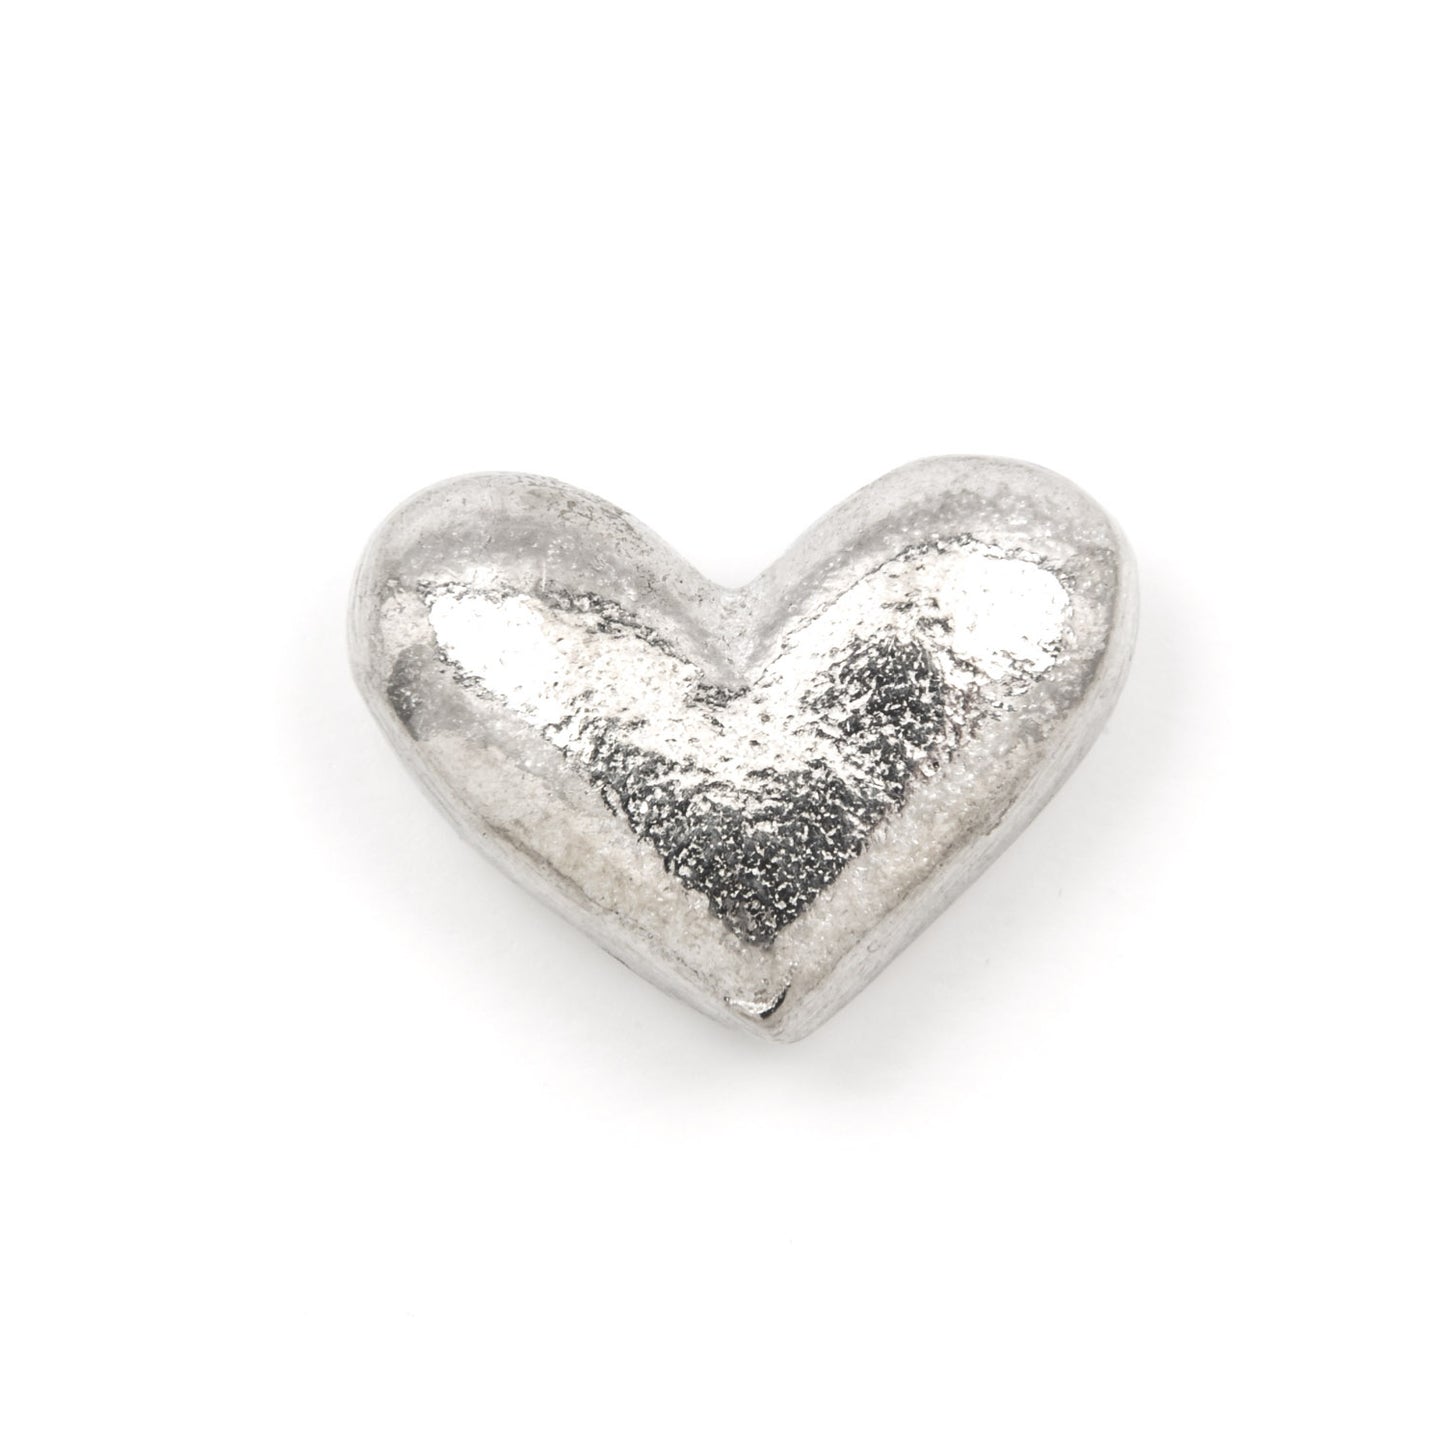 Valentine gift - Take me I'm yours!  Beautiful pewter heart keepsake